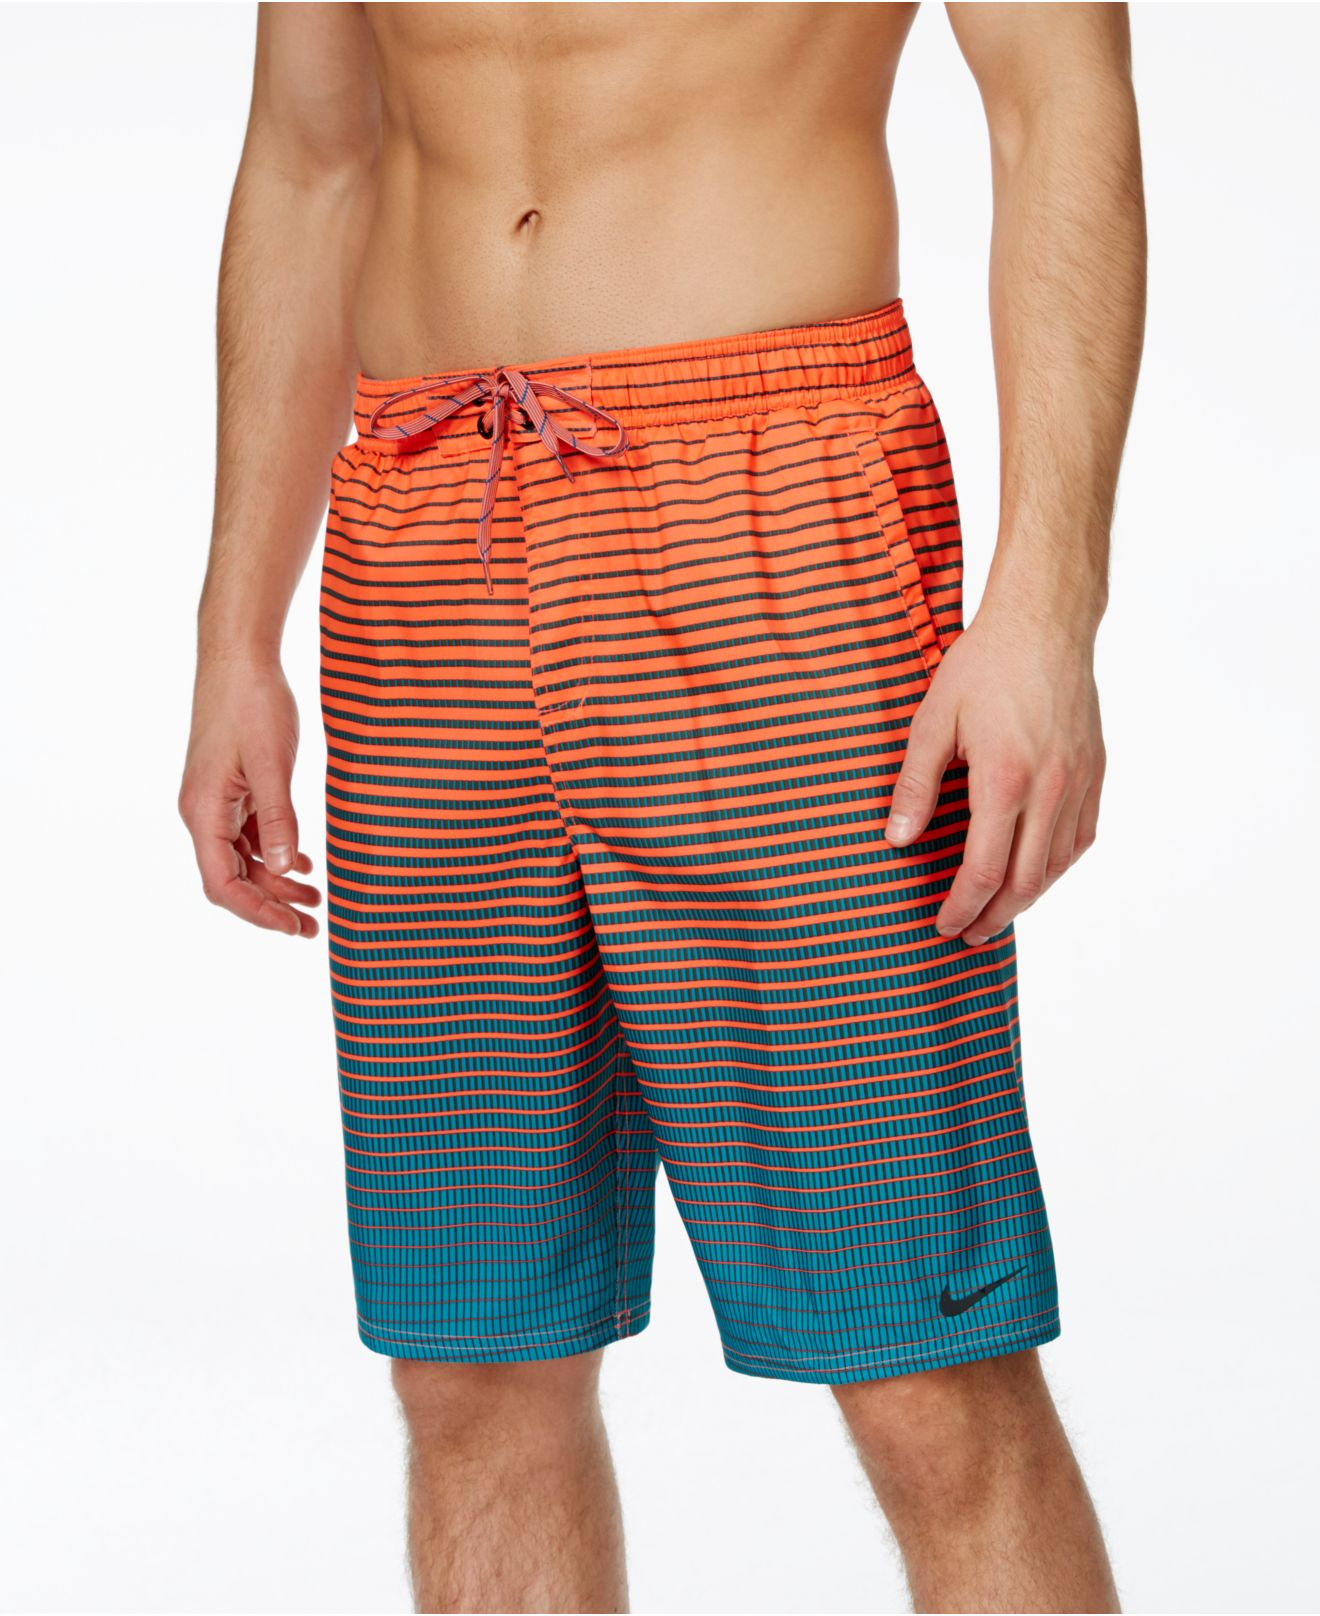 Download Lyst - Nike Performance Quick Dry Swim Trunks in Orange ...